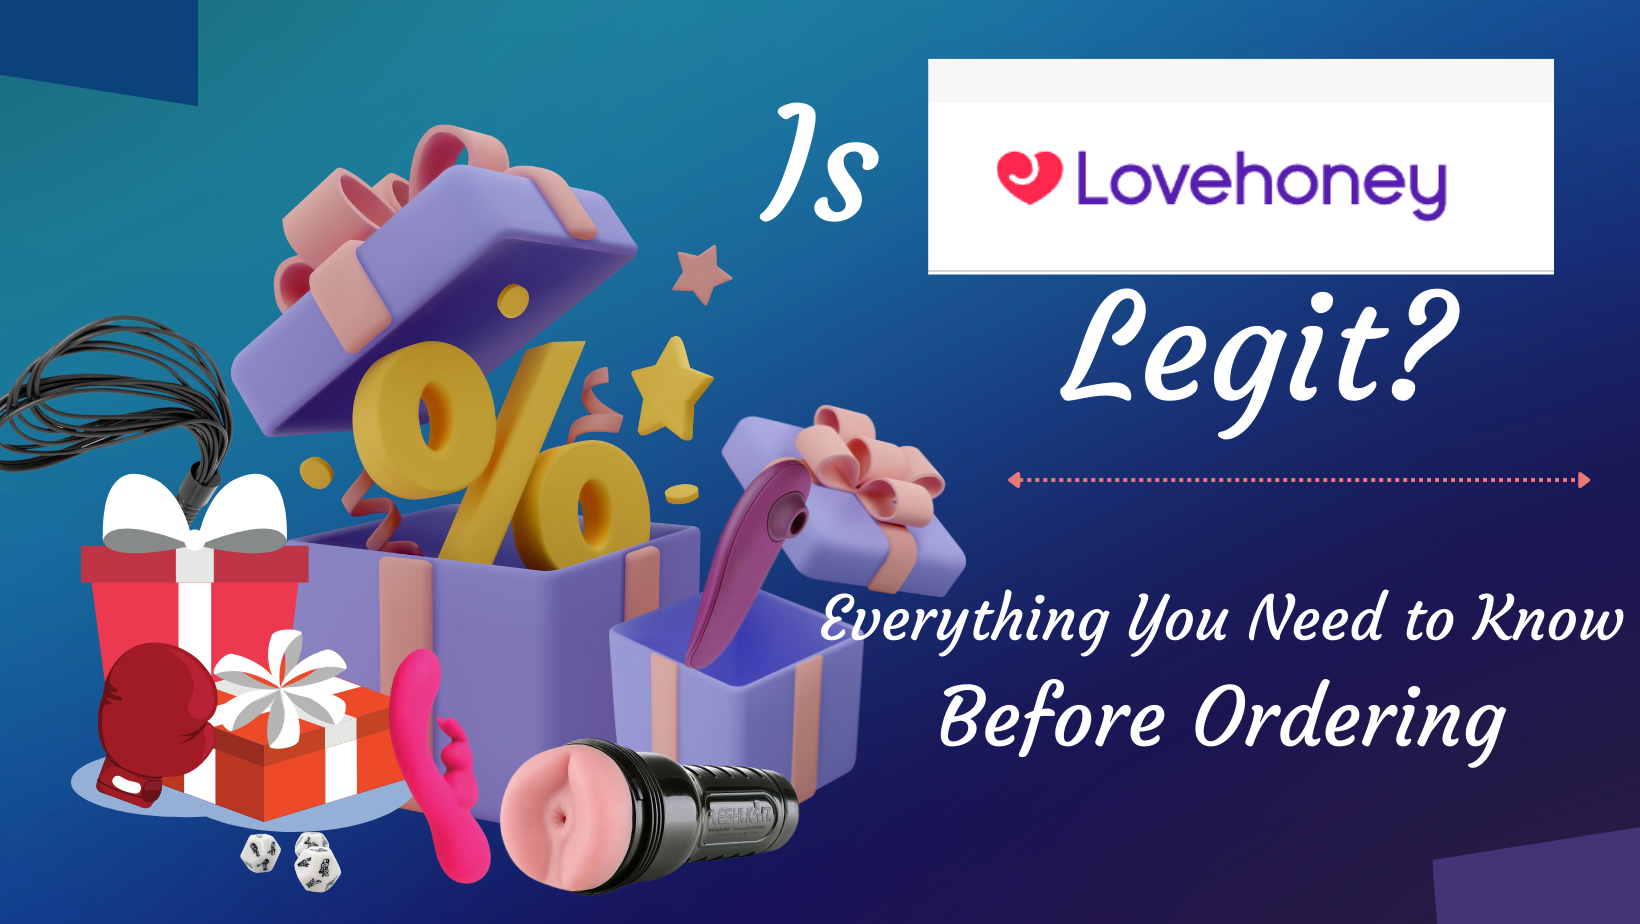 Lovehoney.com Review: Is Lovehoney Legit and Trustworthy?